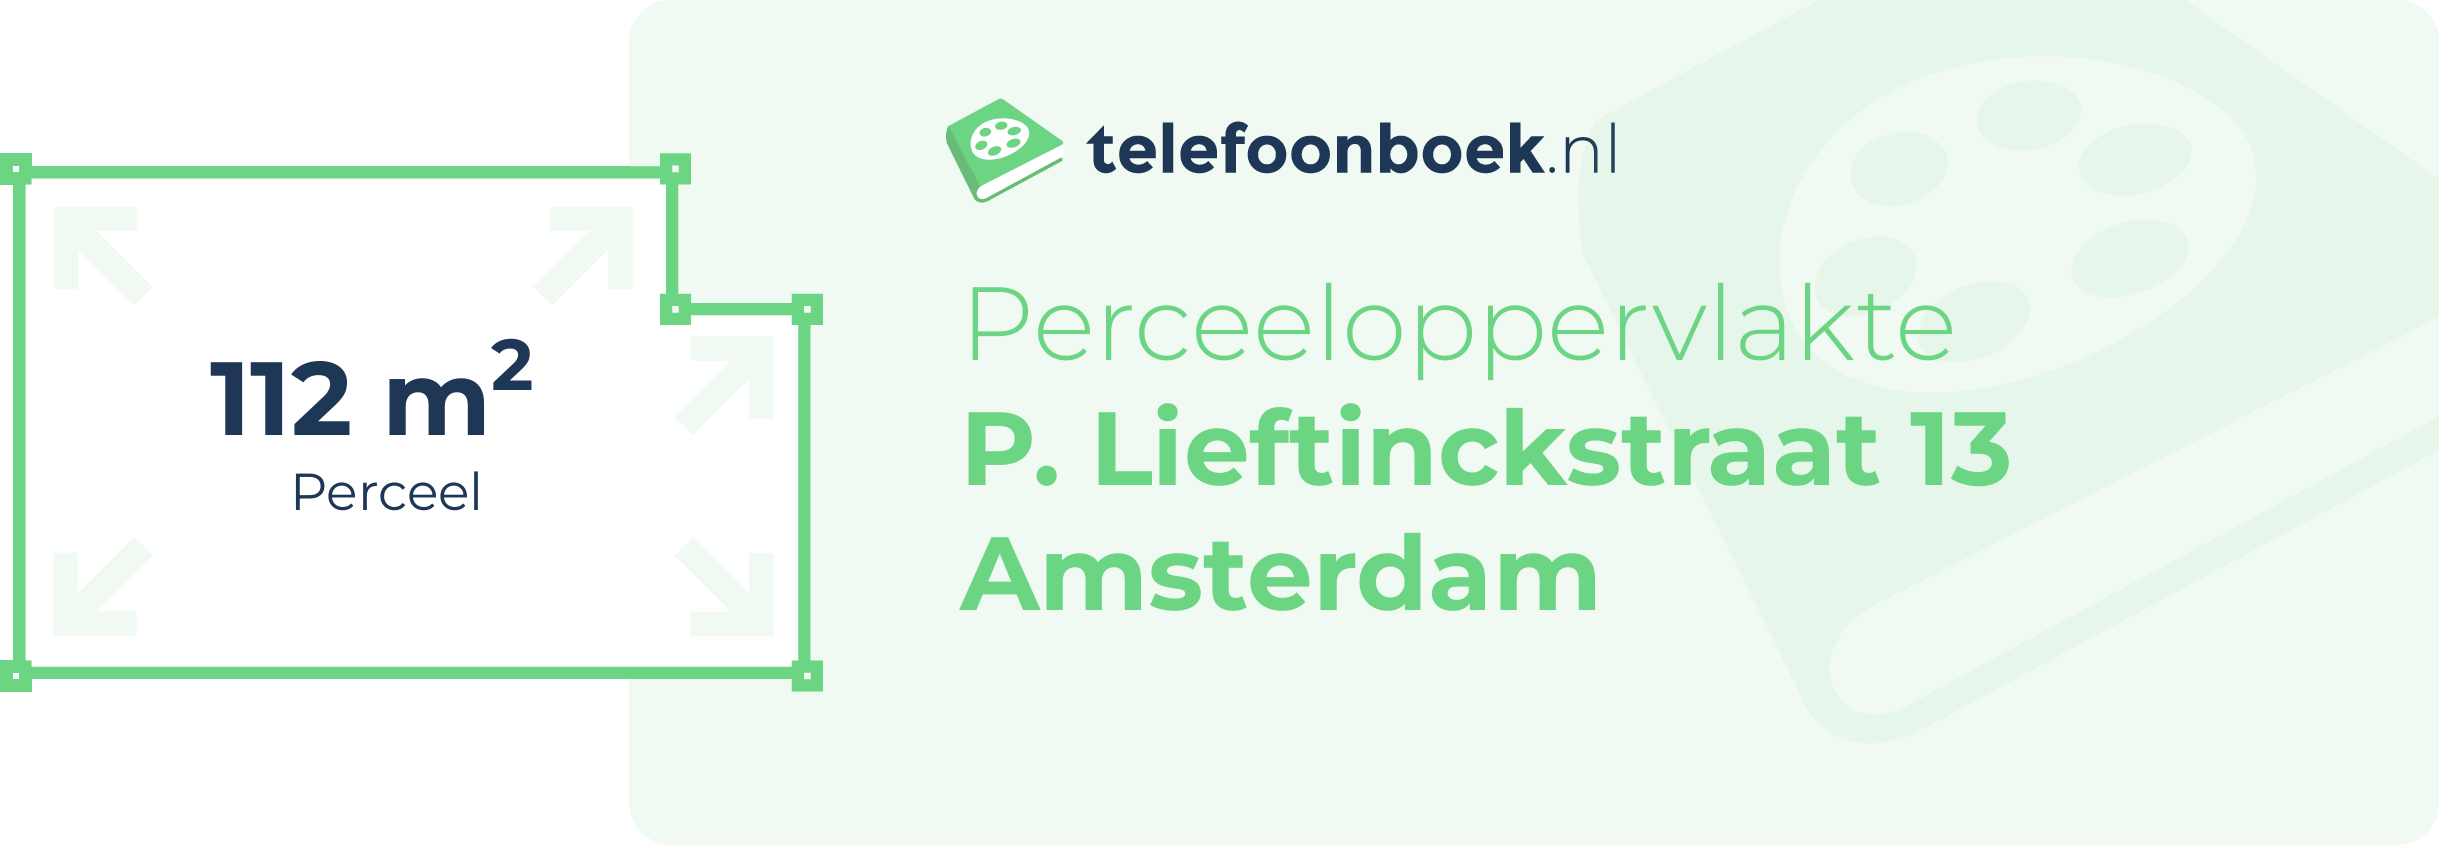 Perceeloppervlakte P. Lieftinckstraat 13 Amsterdam